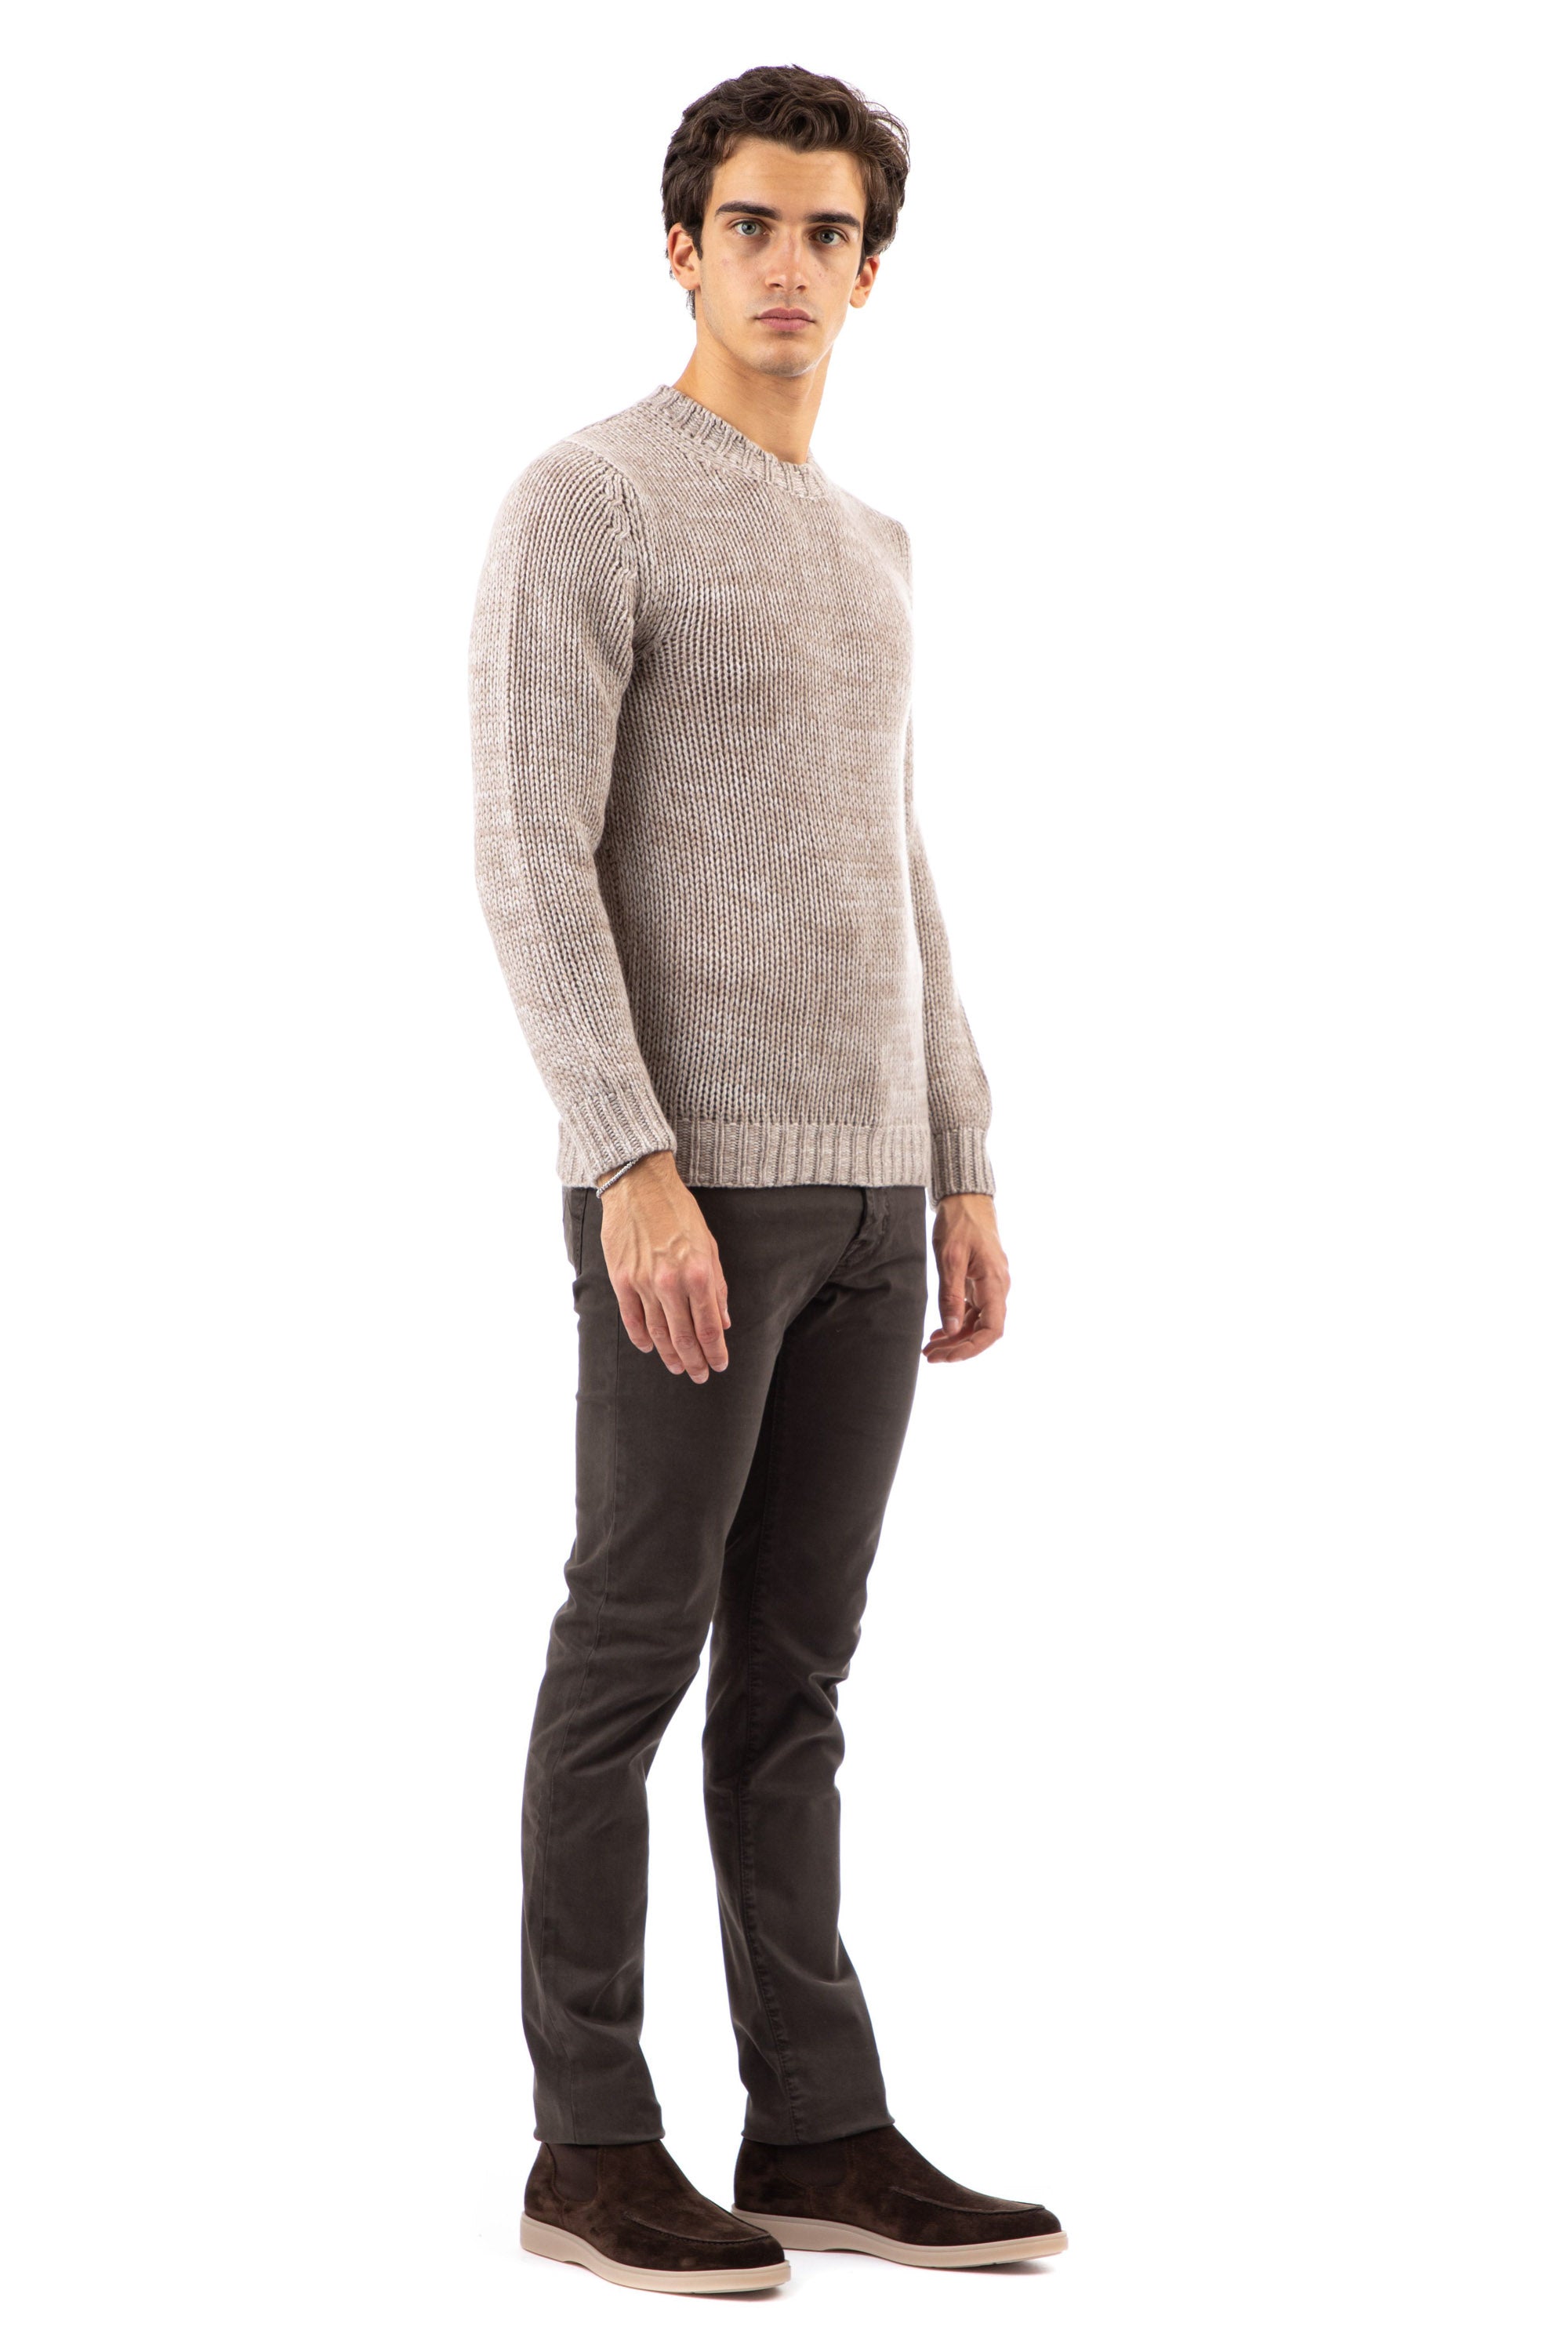 Crew-neck sweater in pure cashmere, gauge 3